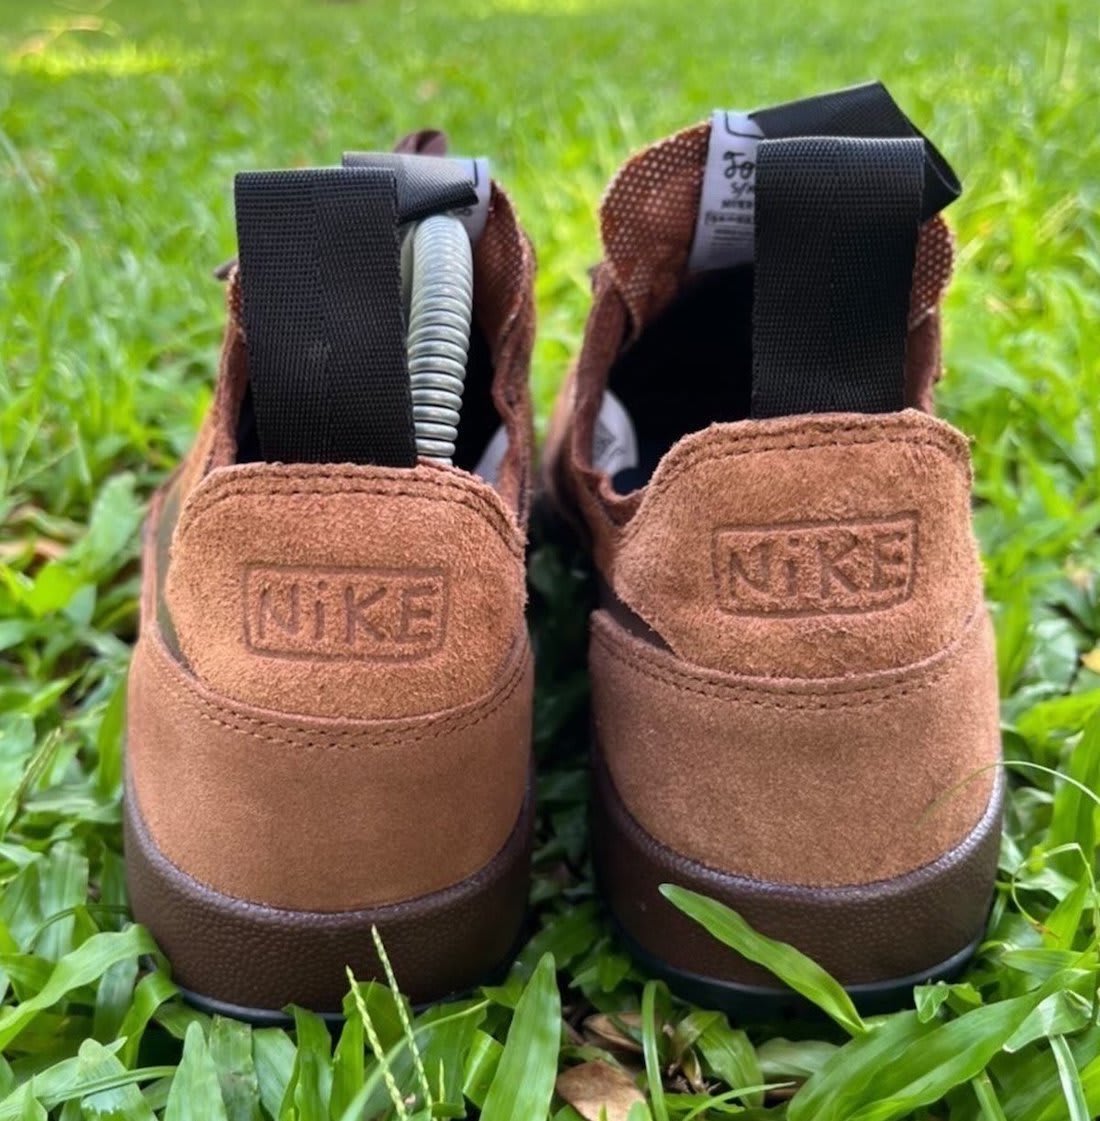 Tom Sachs x Nike General Purpose Shoe Brown Black Release Date DA6672 201 Heel